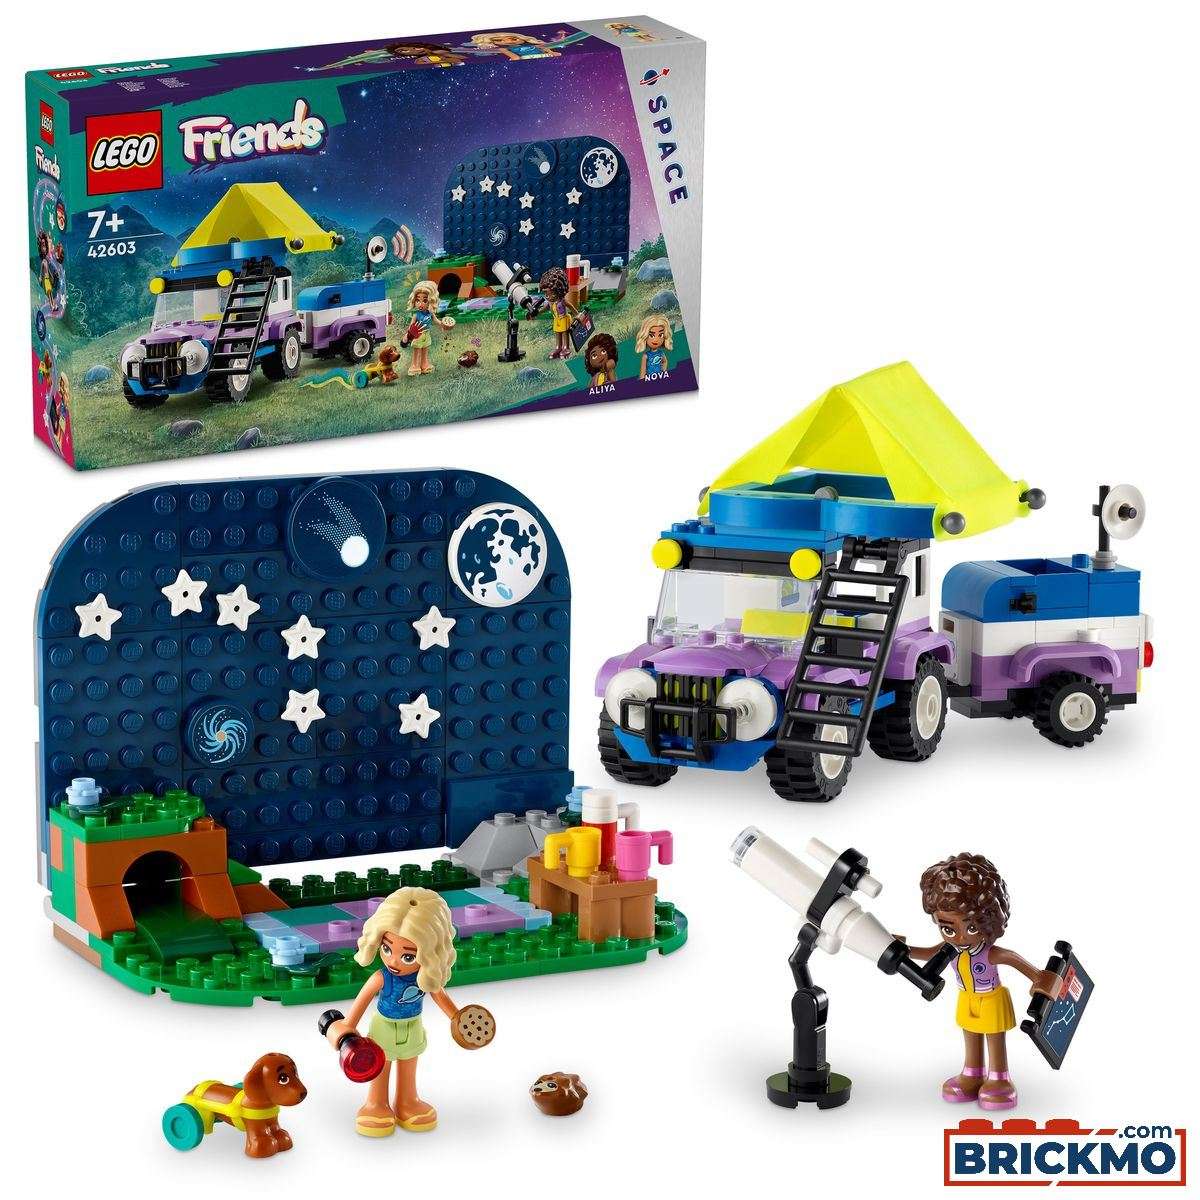 LEGO Friends 42603 Stargazing Camping Vehicle 42603